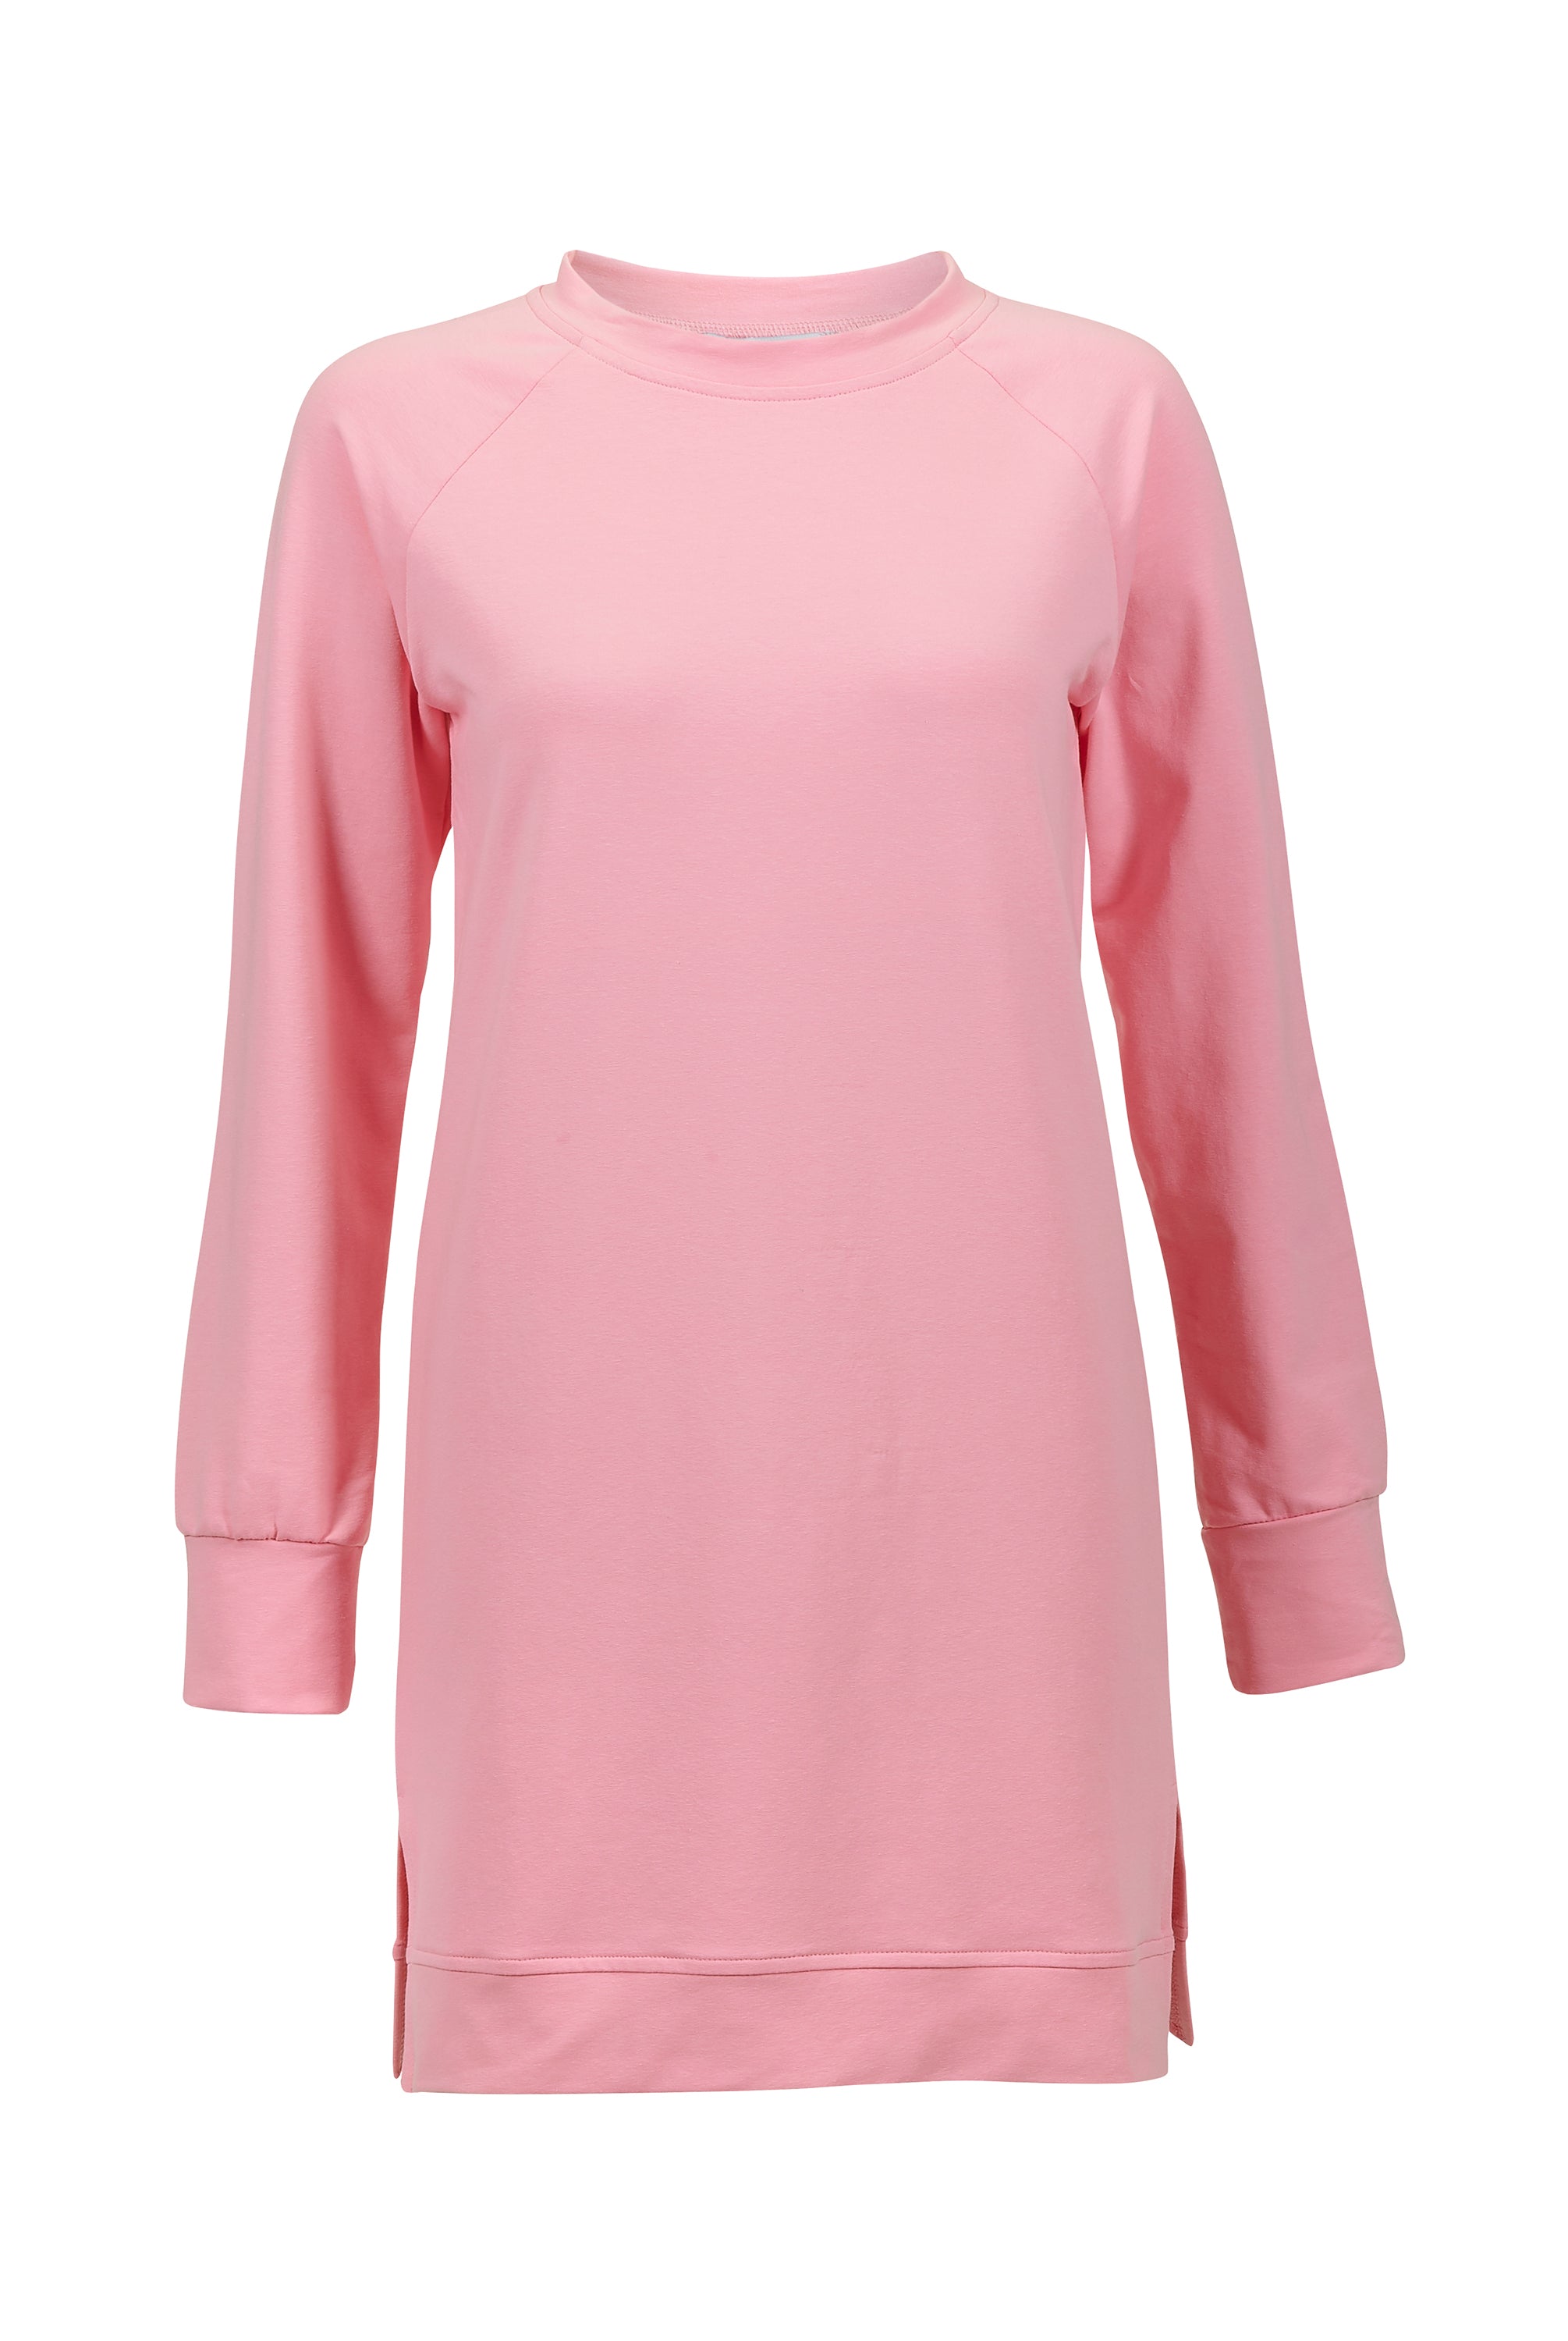 womens pink longline sweatshirts